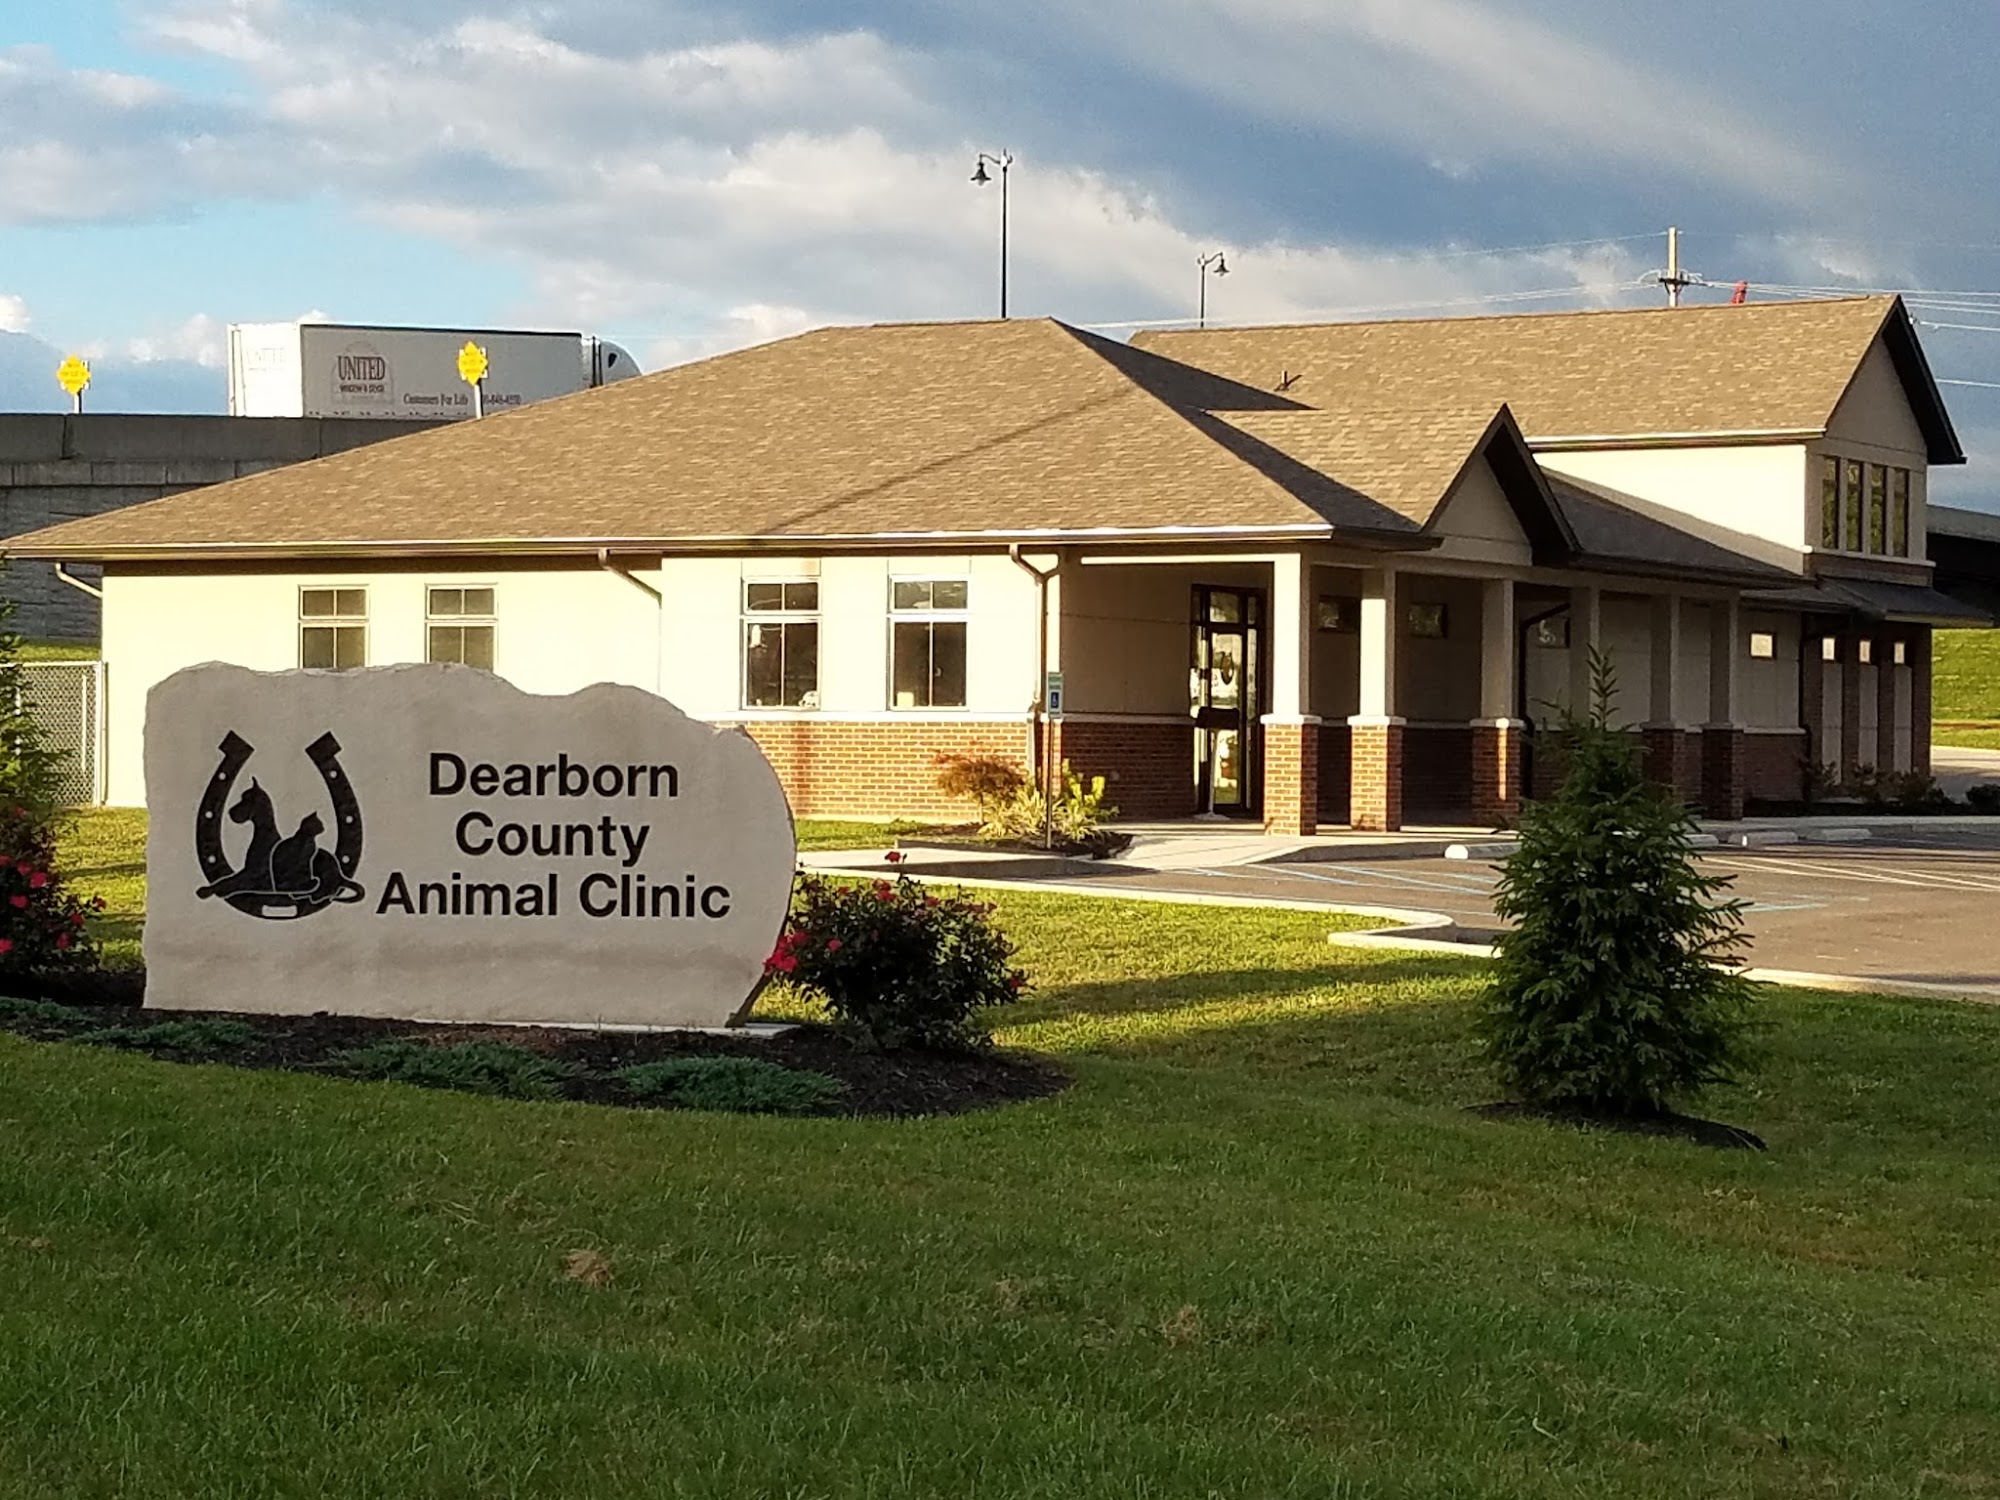 Dearborn County Animal Clinic